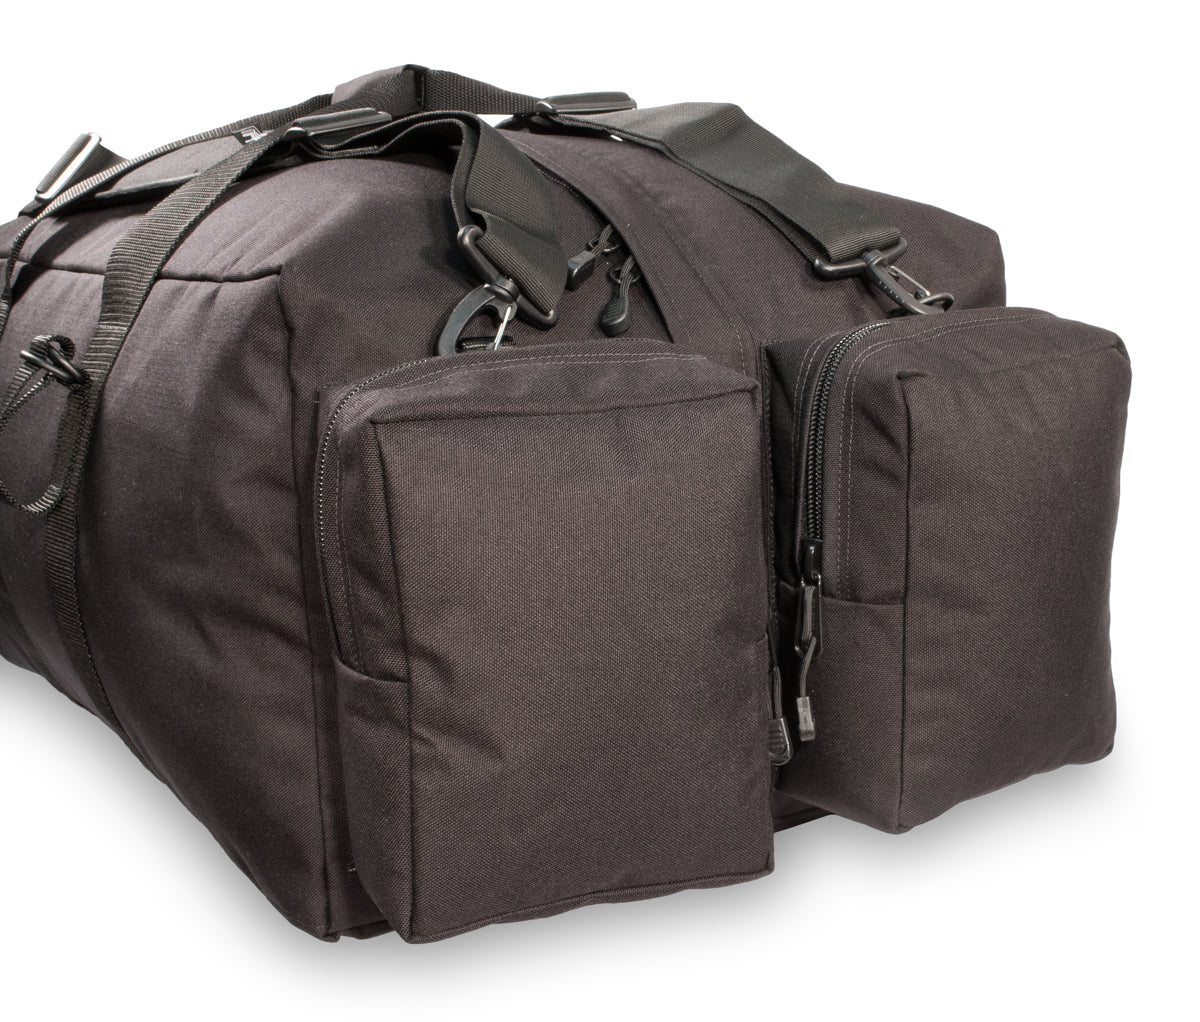 Elite Bags Great Capacity Duffle — Horizon Medical Products